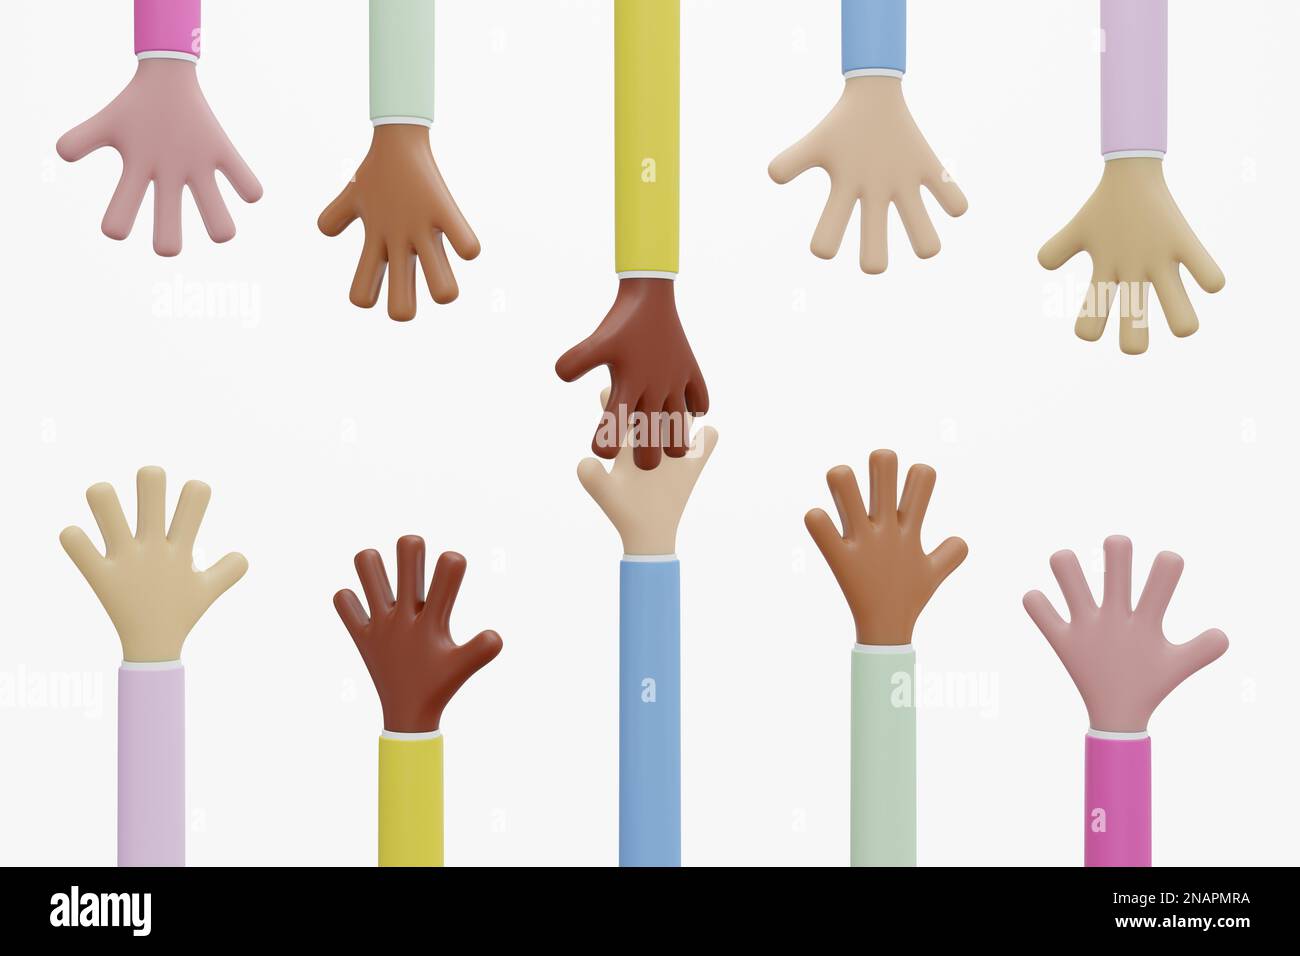 https://c8.alamy.com/comp/2NAPMRA/cartoons-hands-diversity-concept-of-different-skin-colour-working-together-3d-illustration-2NAPMRA.jpg